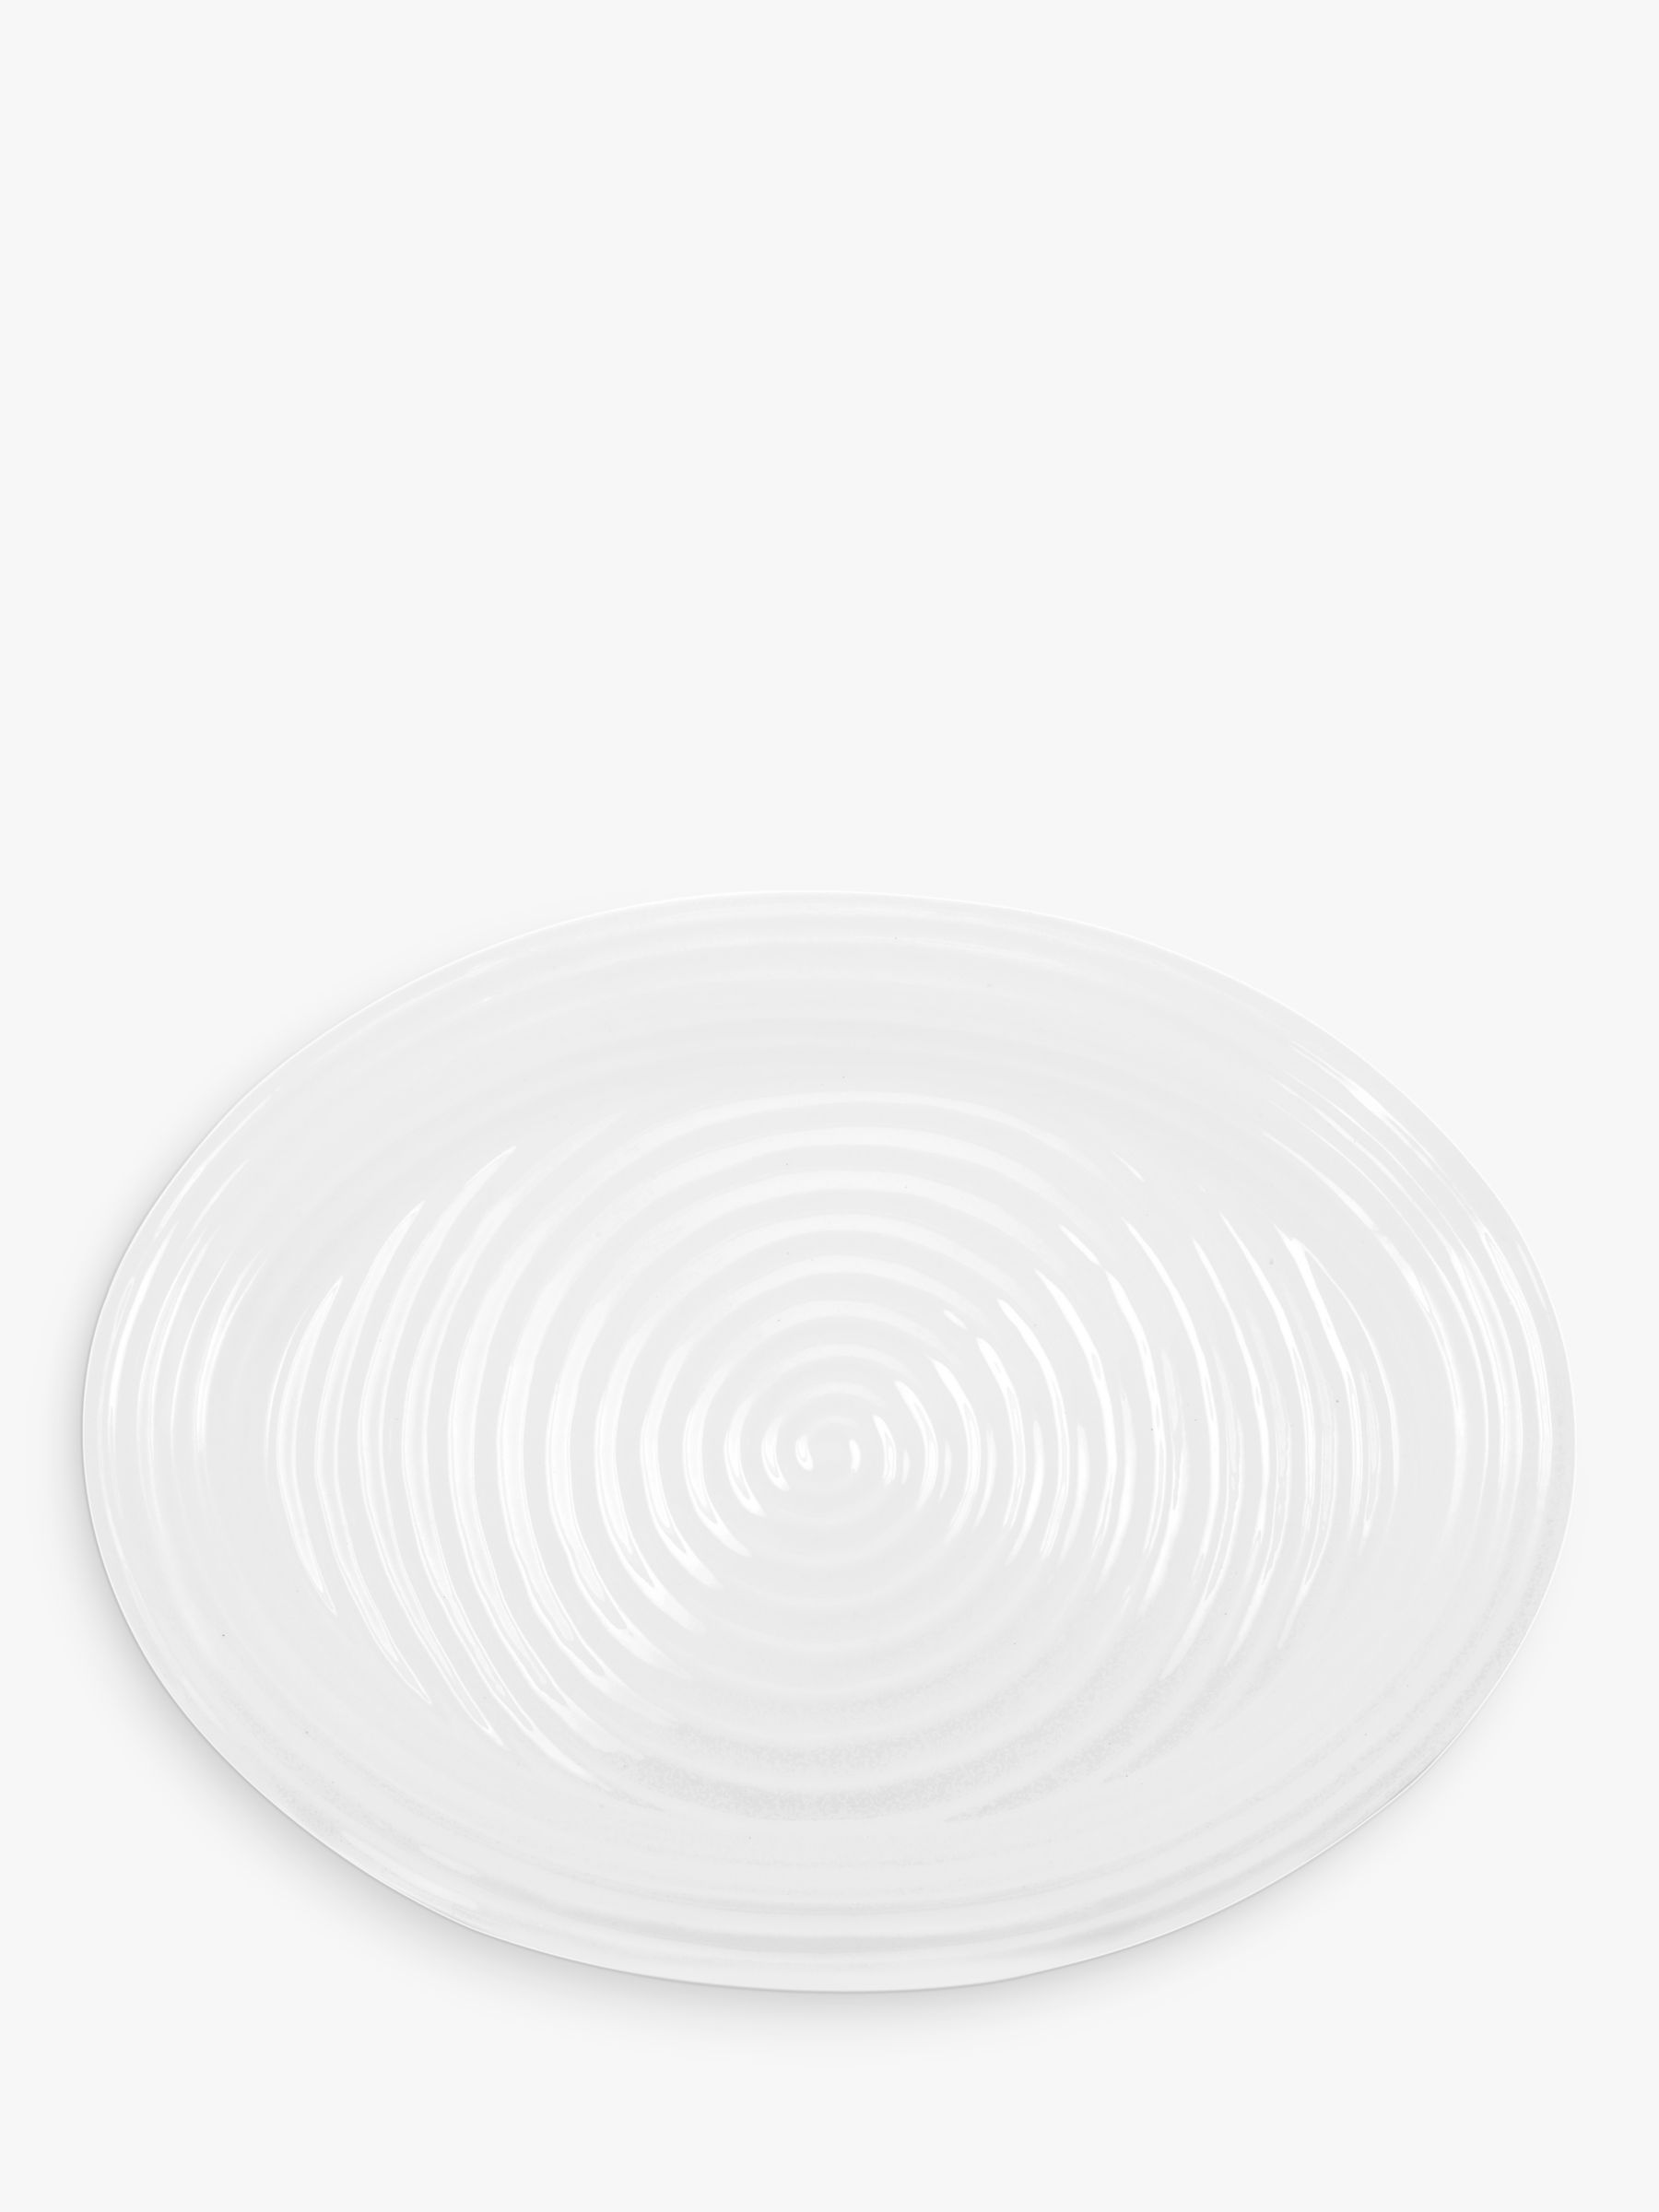 Sophie Conran for Portmeirion Large Platter, White, L51cm